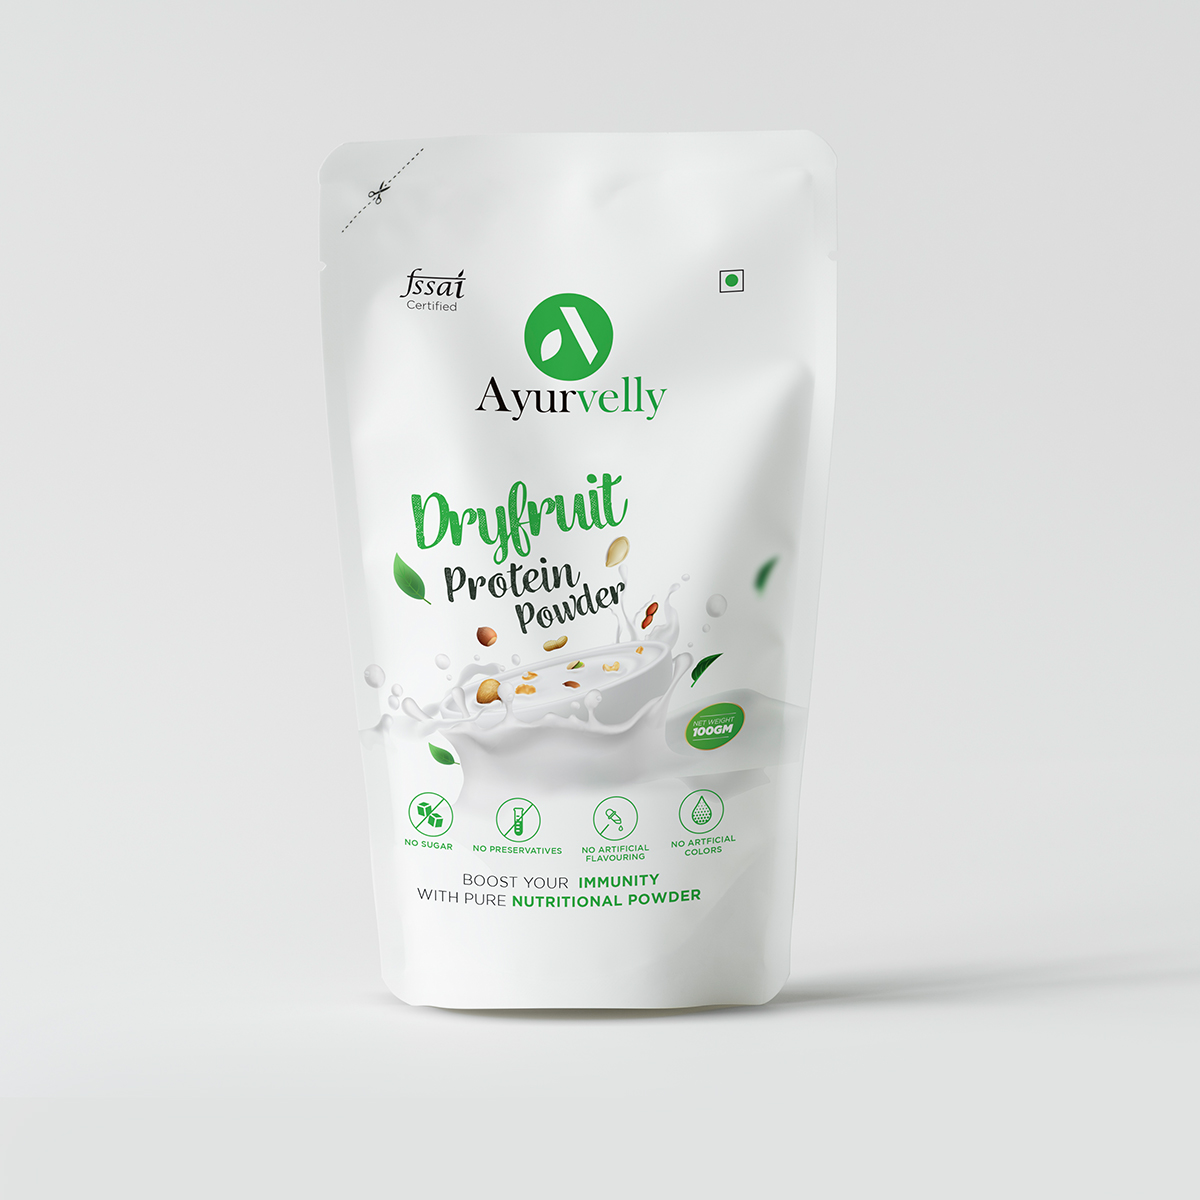 Dryfruit Packaging Design